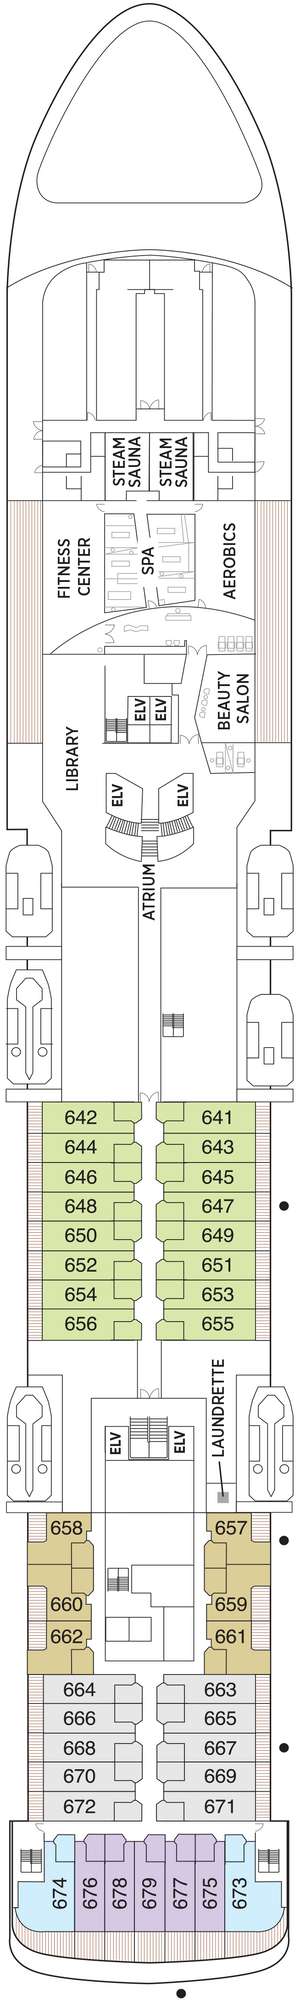 Deck plan for Regent Seven Seas Voyager